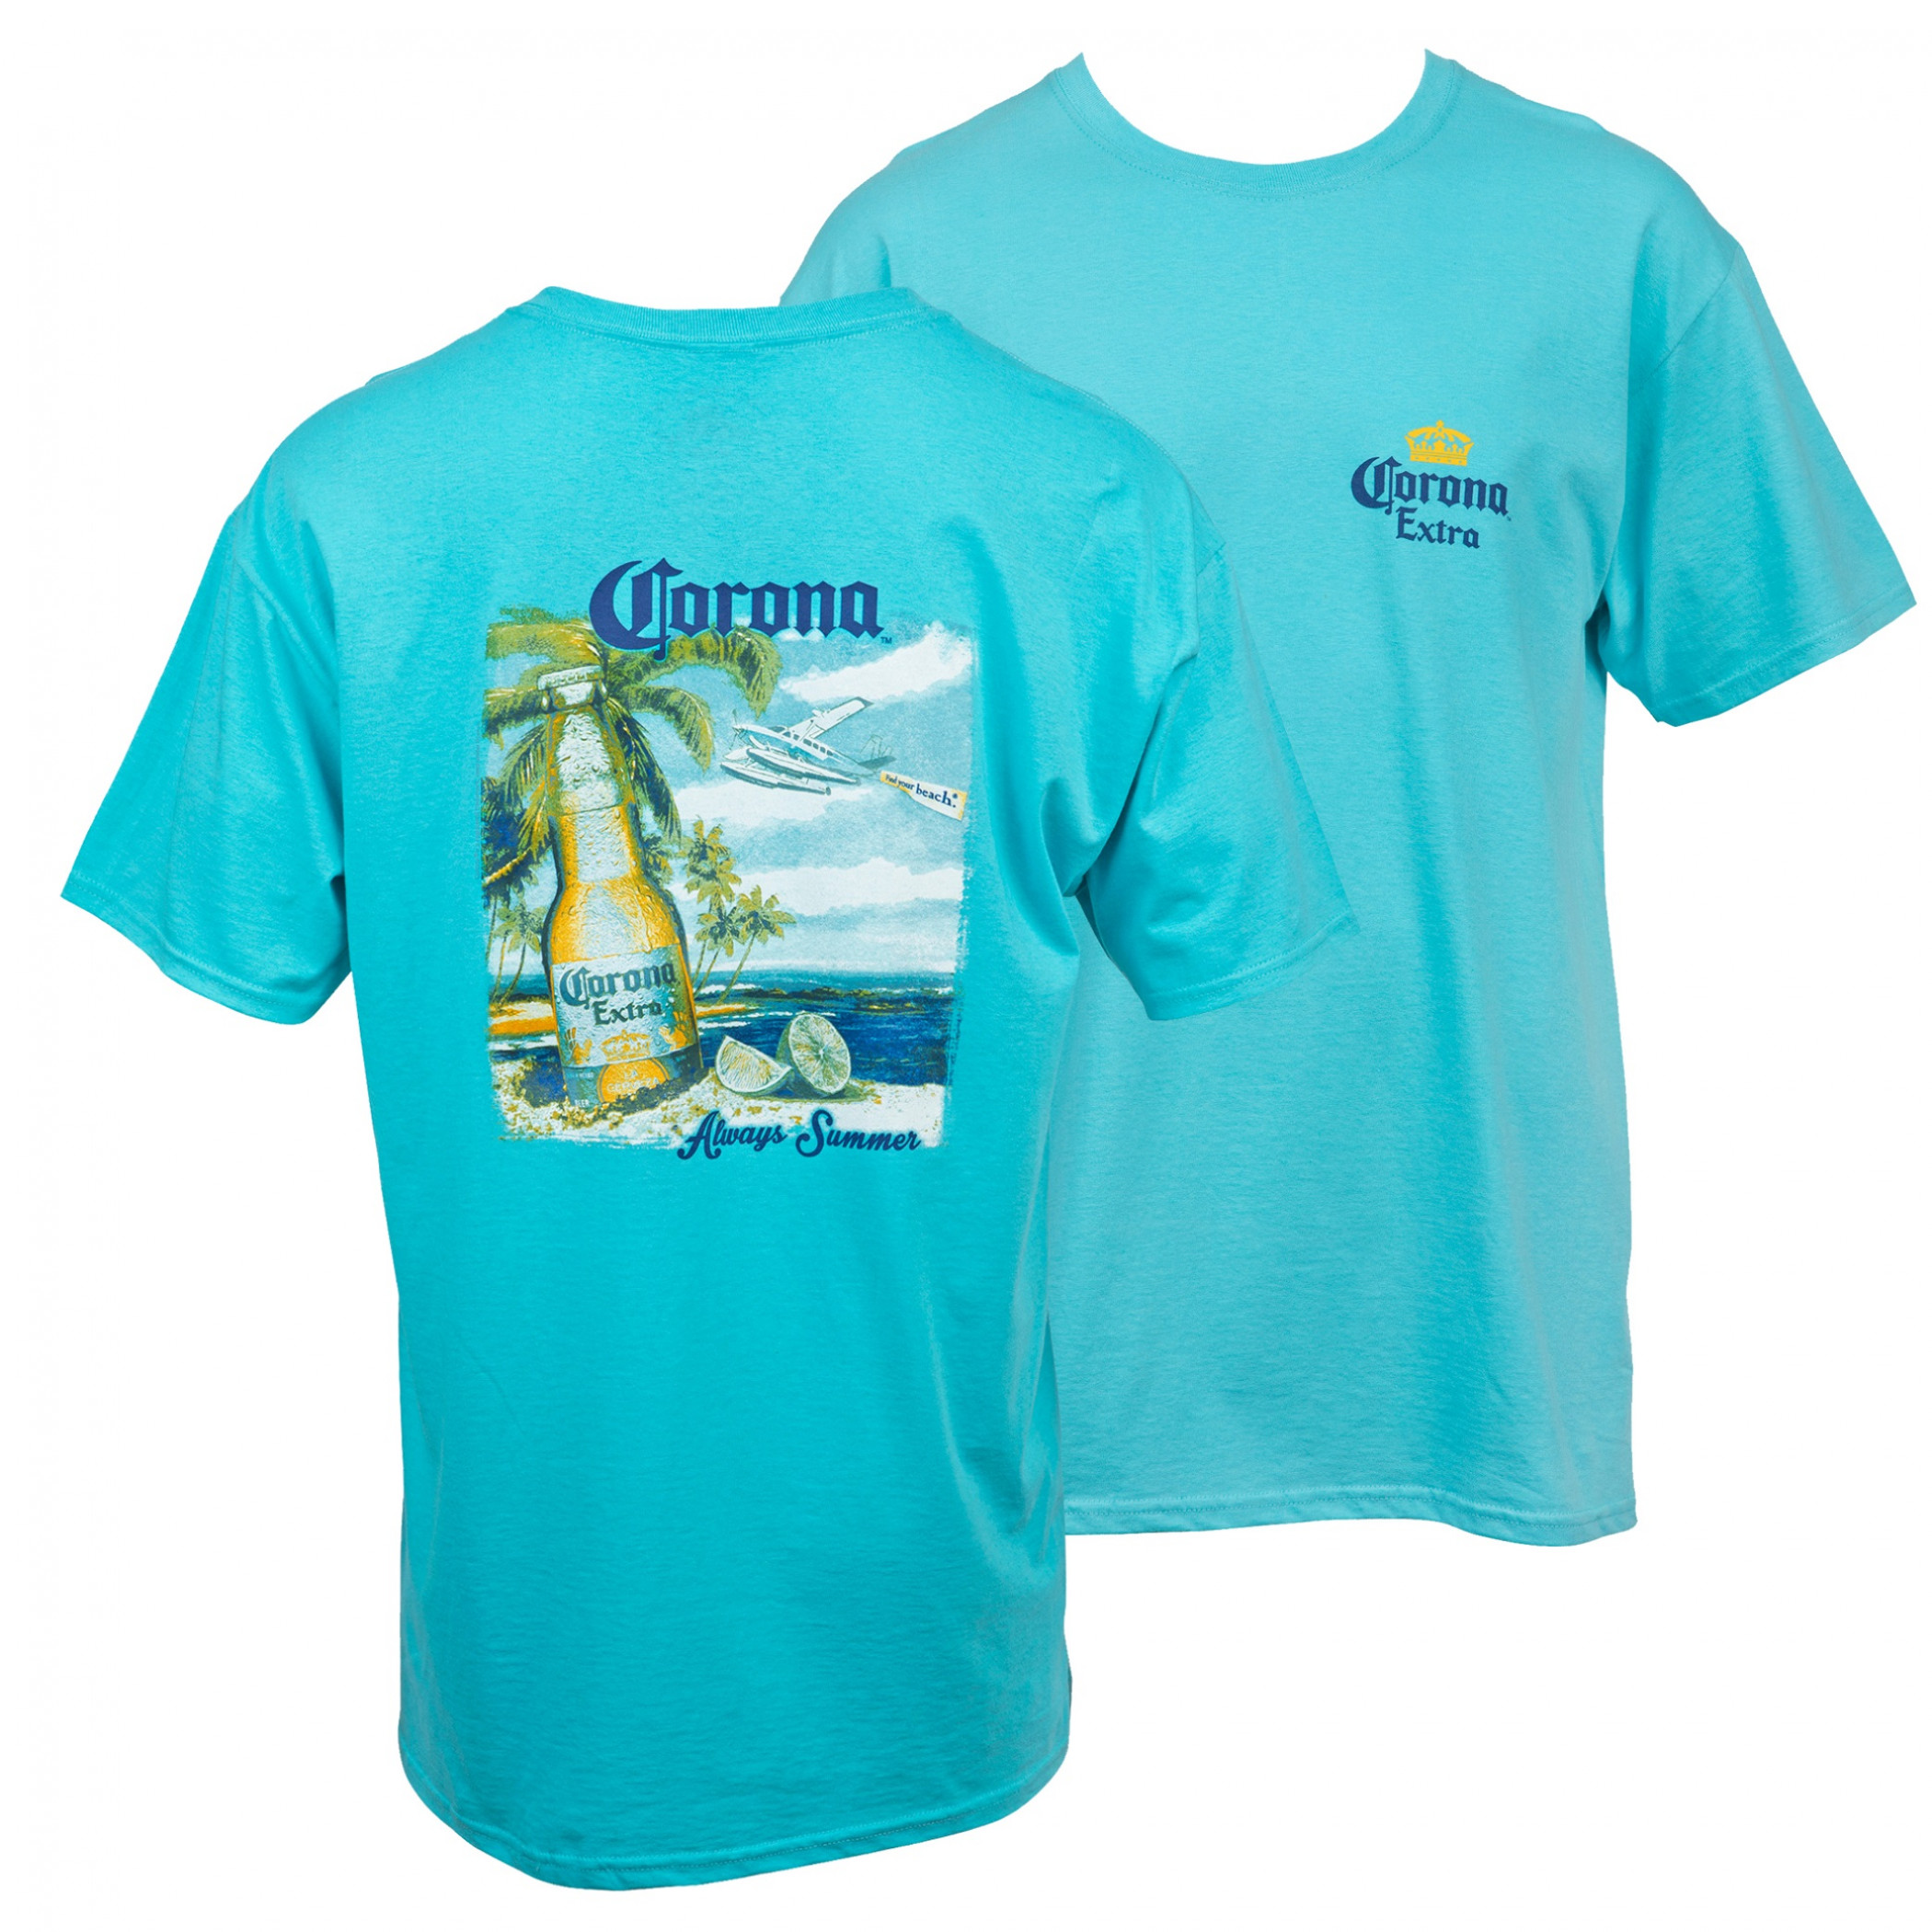 Corona Extra Always Summer At The Beach Blue T-Shirt